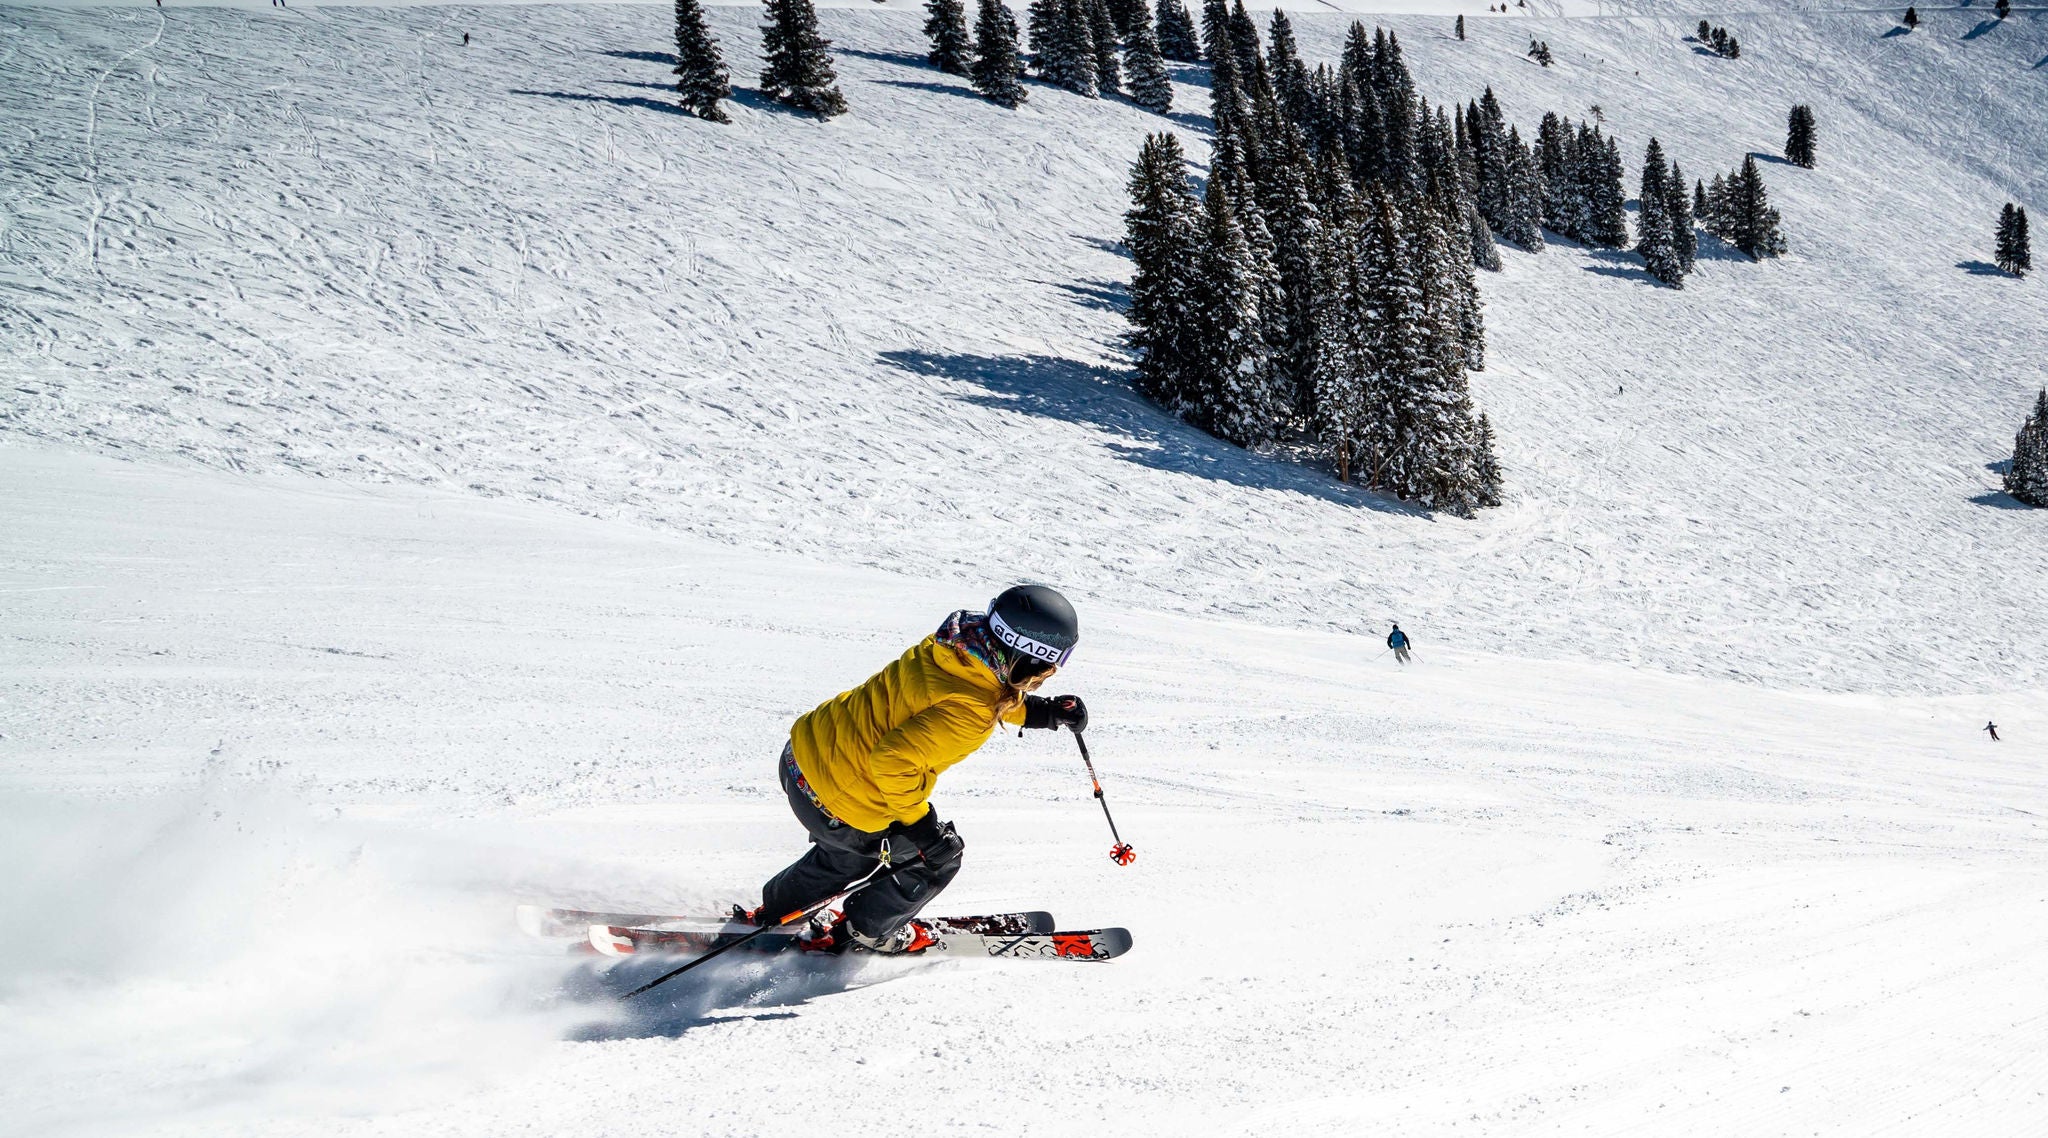 Skier on slopes